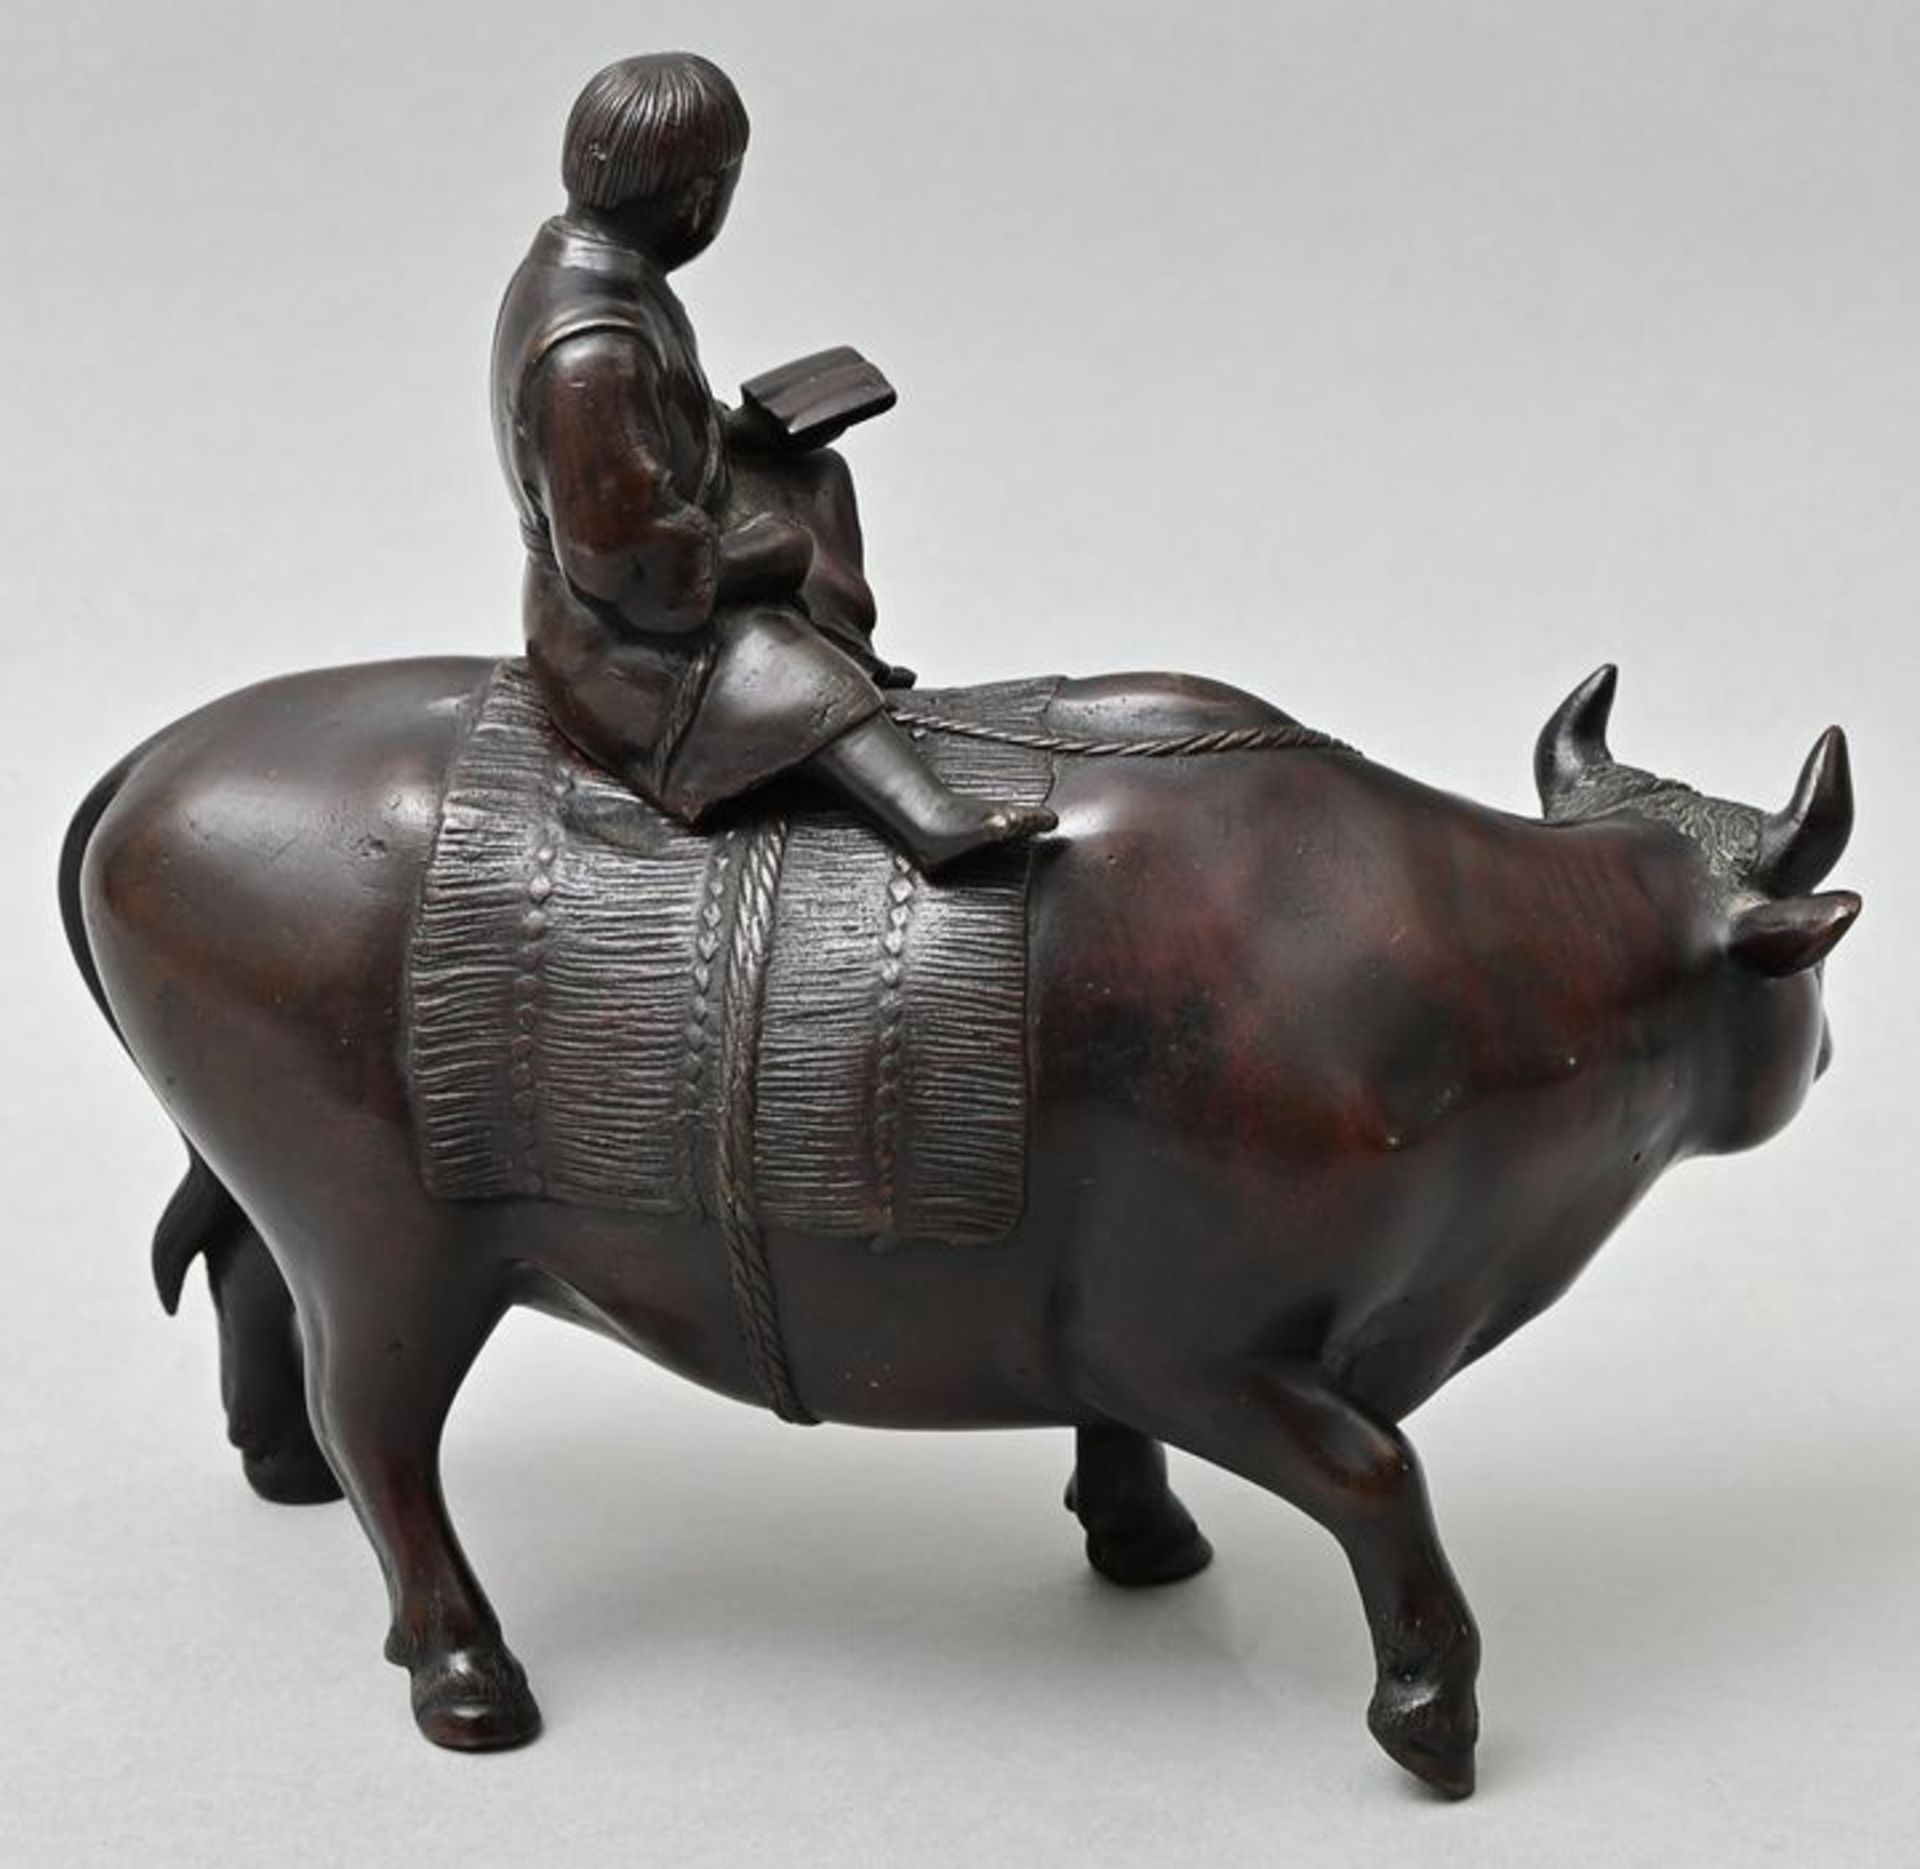 Junge auf Wasserbüffel/ boy riding on a water buffalo - Bild 4 aus 5